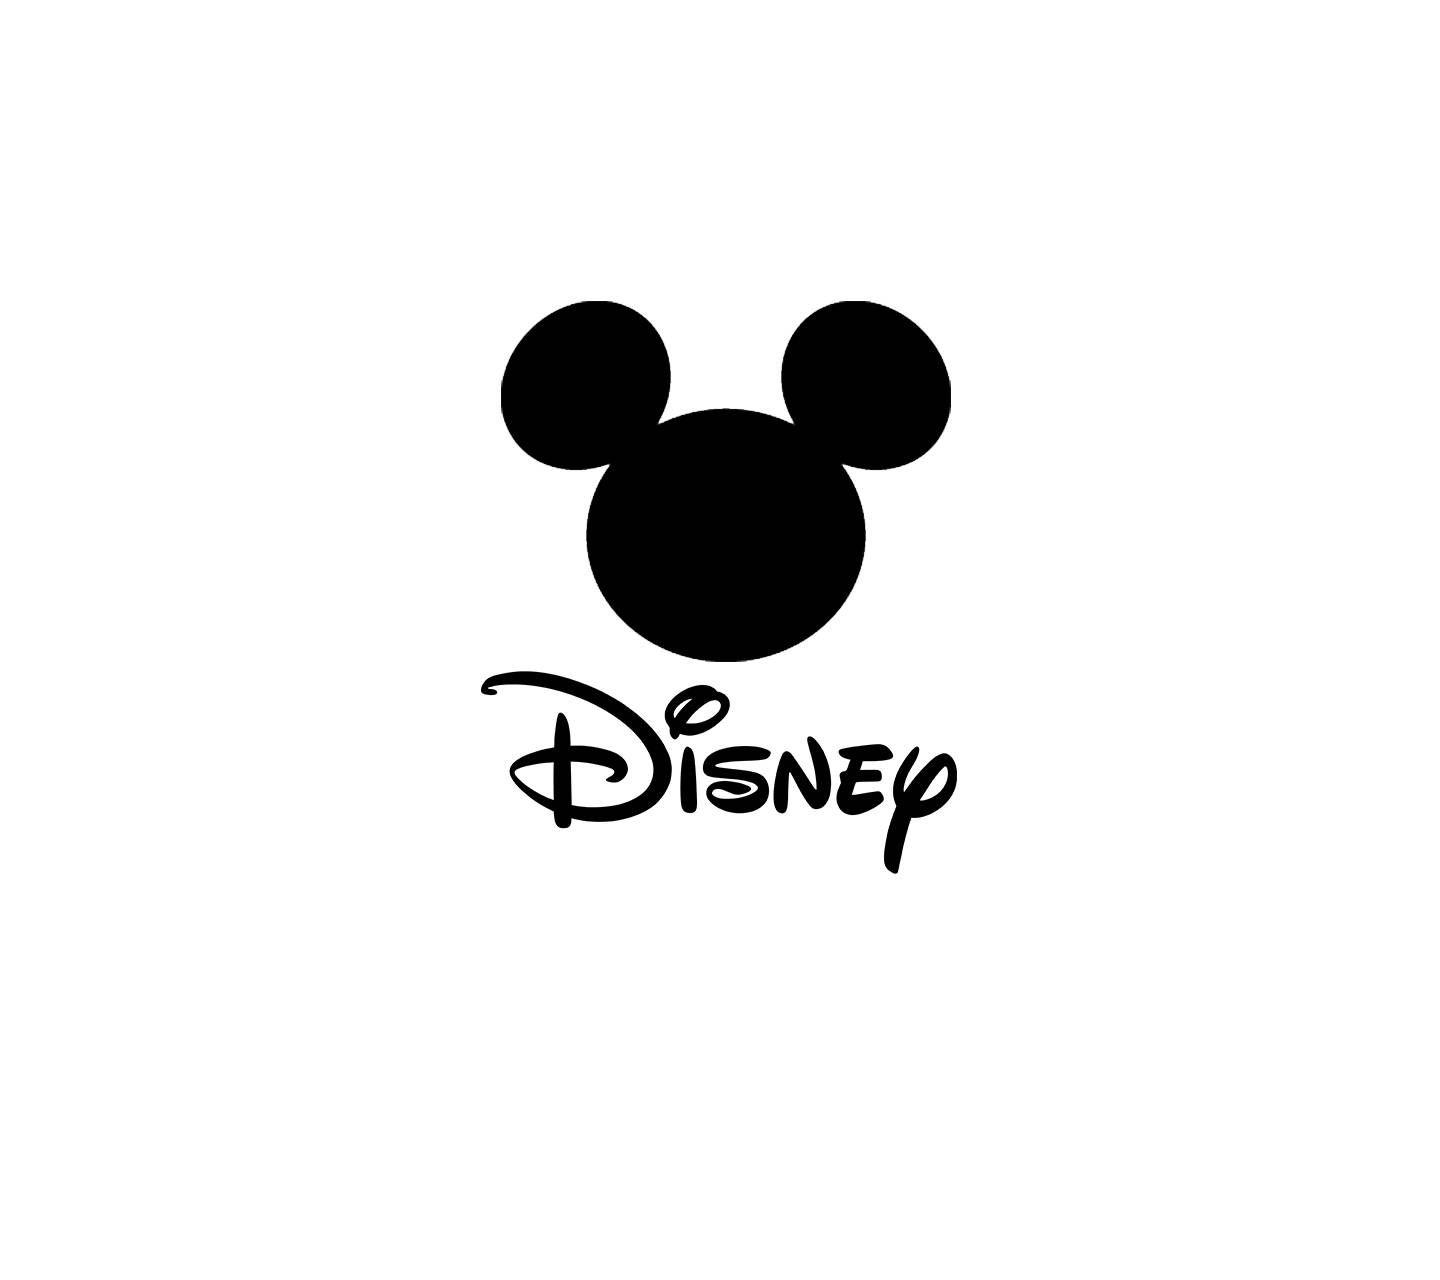 Disnesy Logo - Disney Logo White Wallpaper by NeoMystic - 17 - Free on ZEDGE™